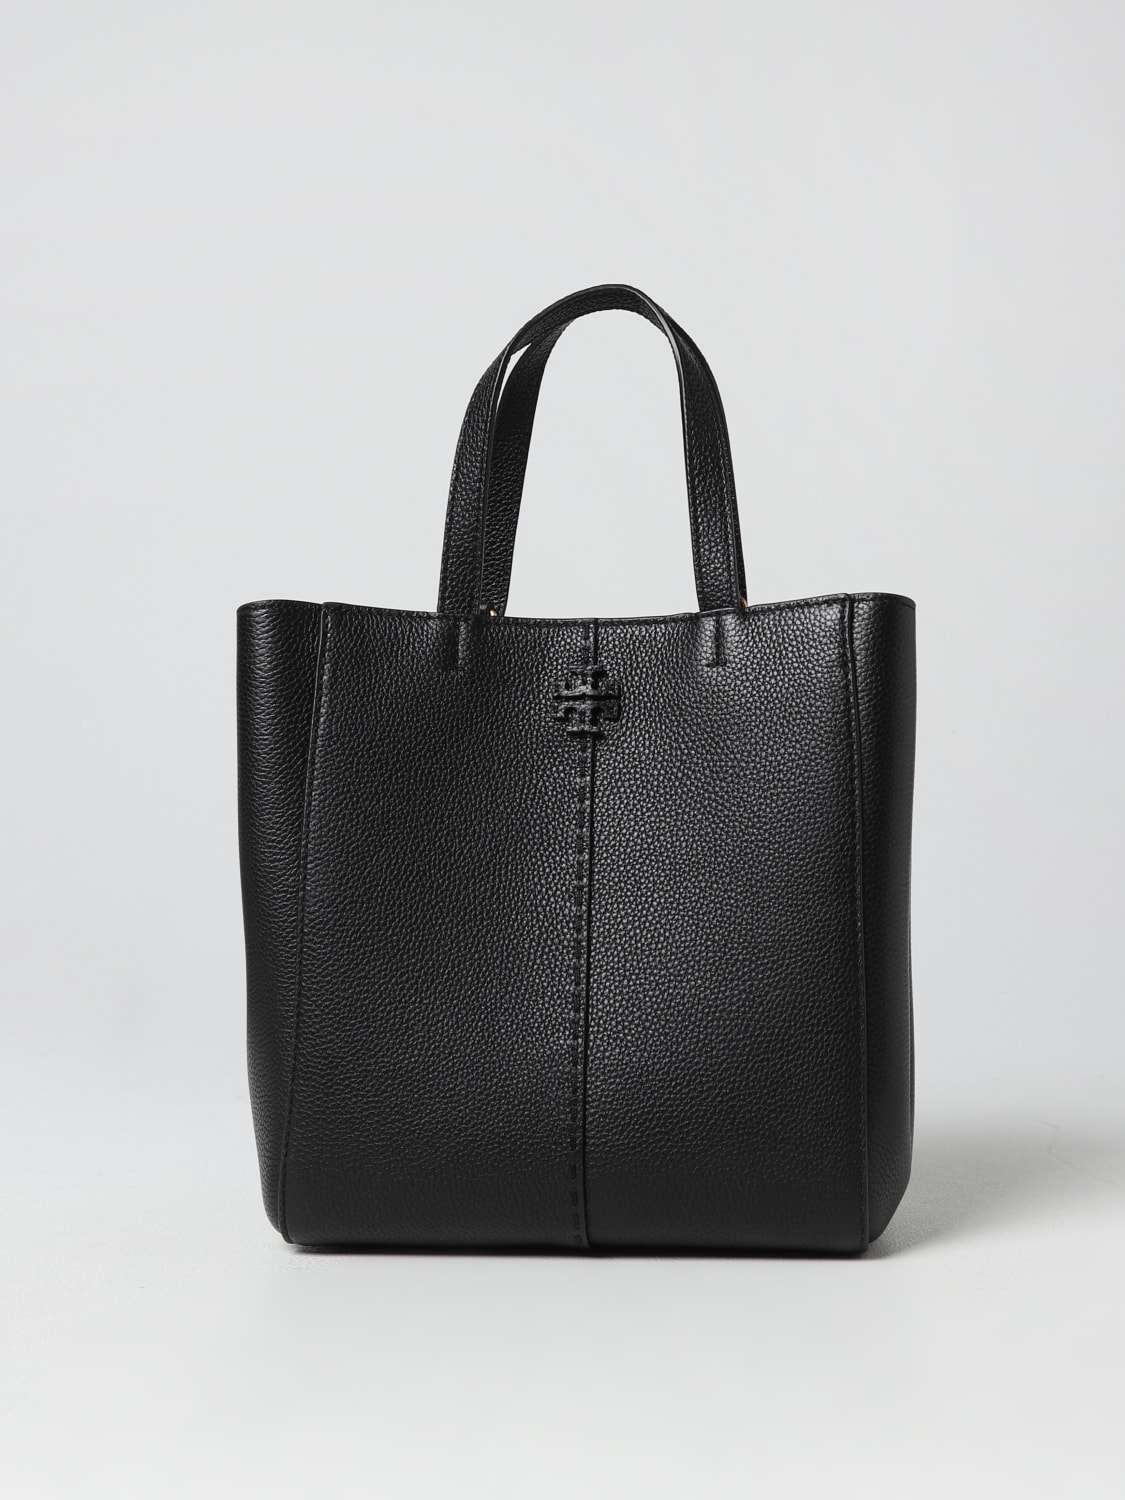 Handbag Tory Burch: Tory Burch handbag for women black 2